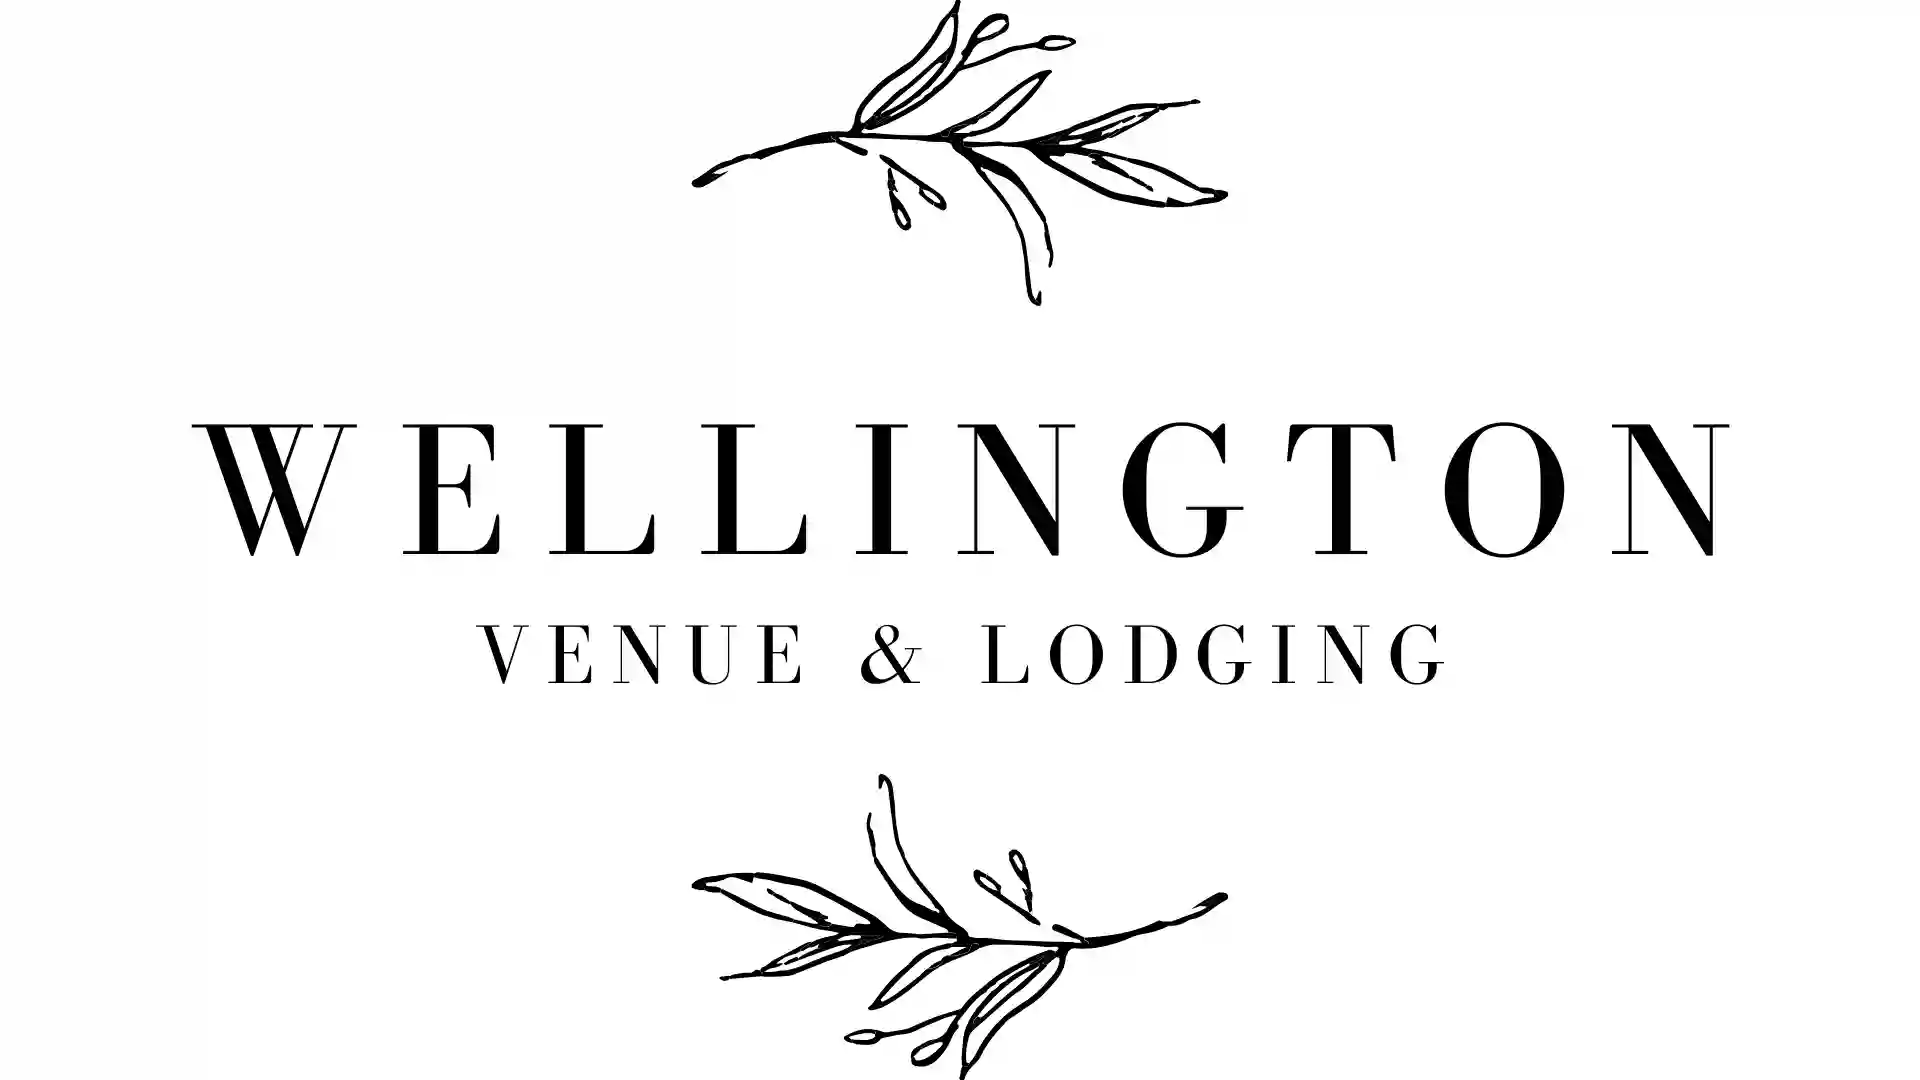 Wellington Venue & Lodging